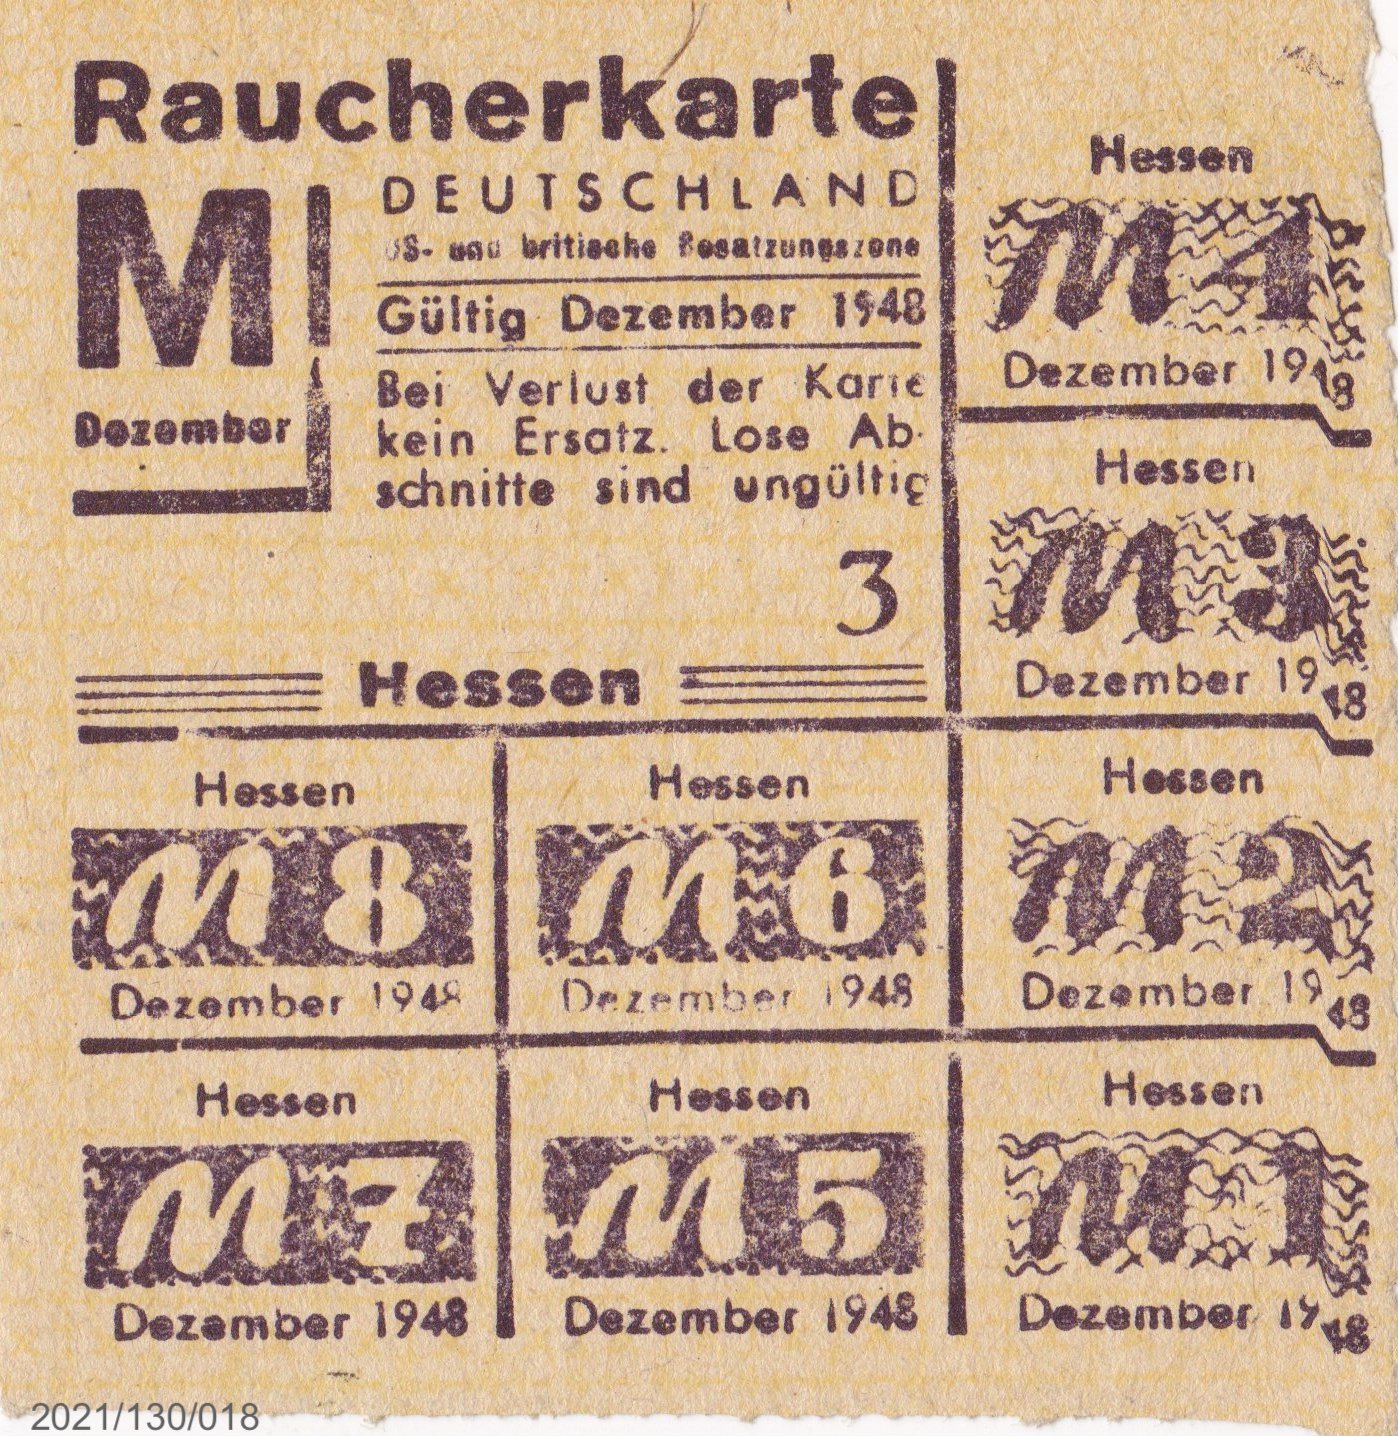 Raucherkarte Deutschland US- und britische Besatzungszone Dezember 1948 (Museumsgesellschaft Bad Dürkheim e. V. CC BY-NC-SA)